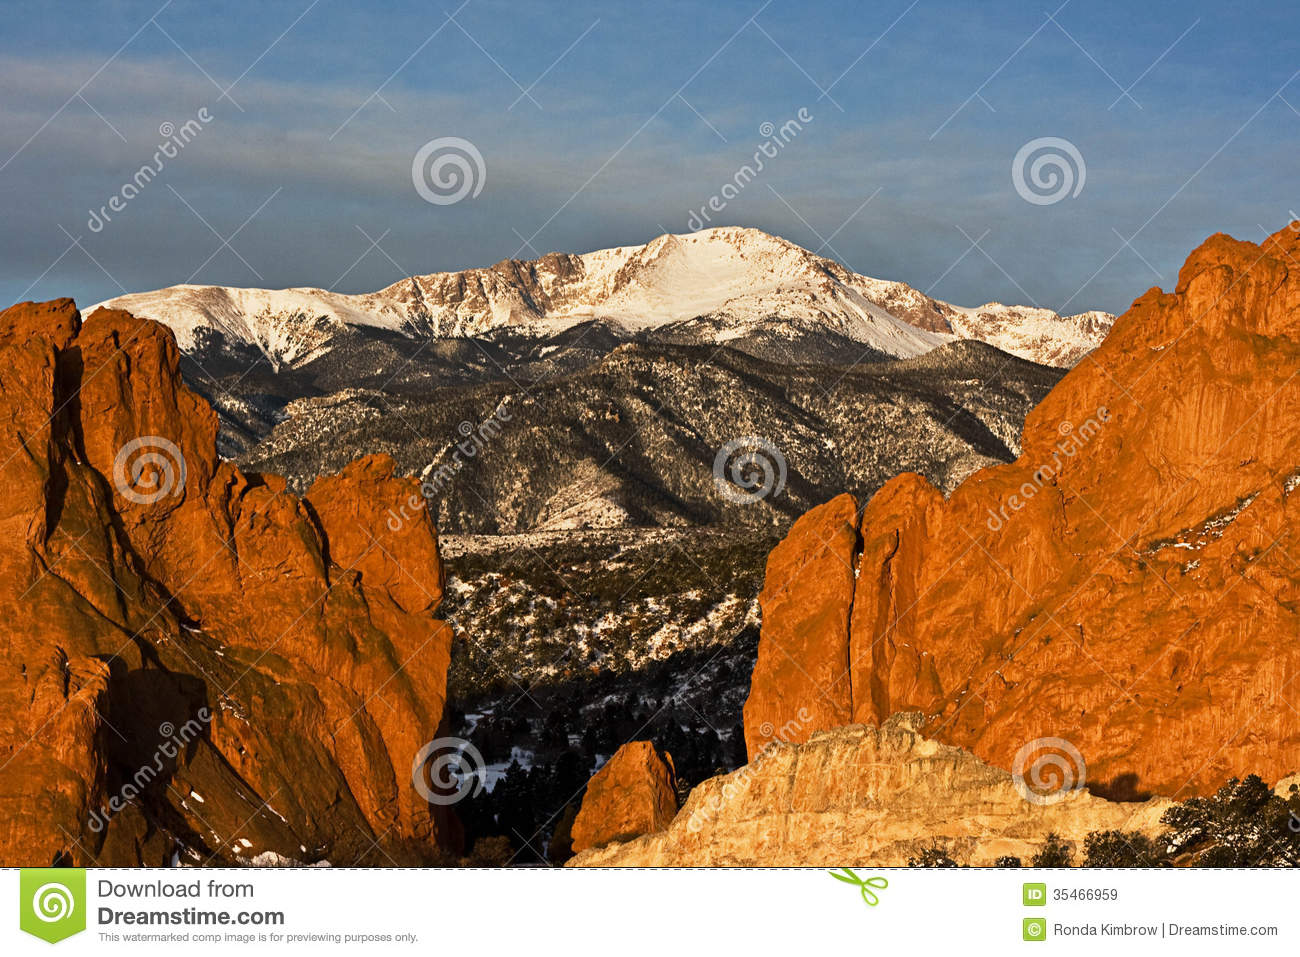 Pikes Peak Between The Garden Of The Gods Rock Formation In Colorado